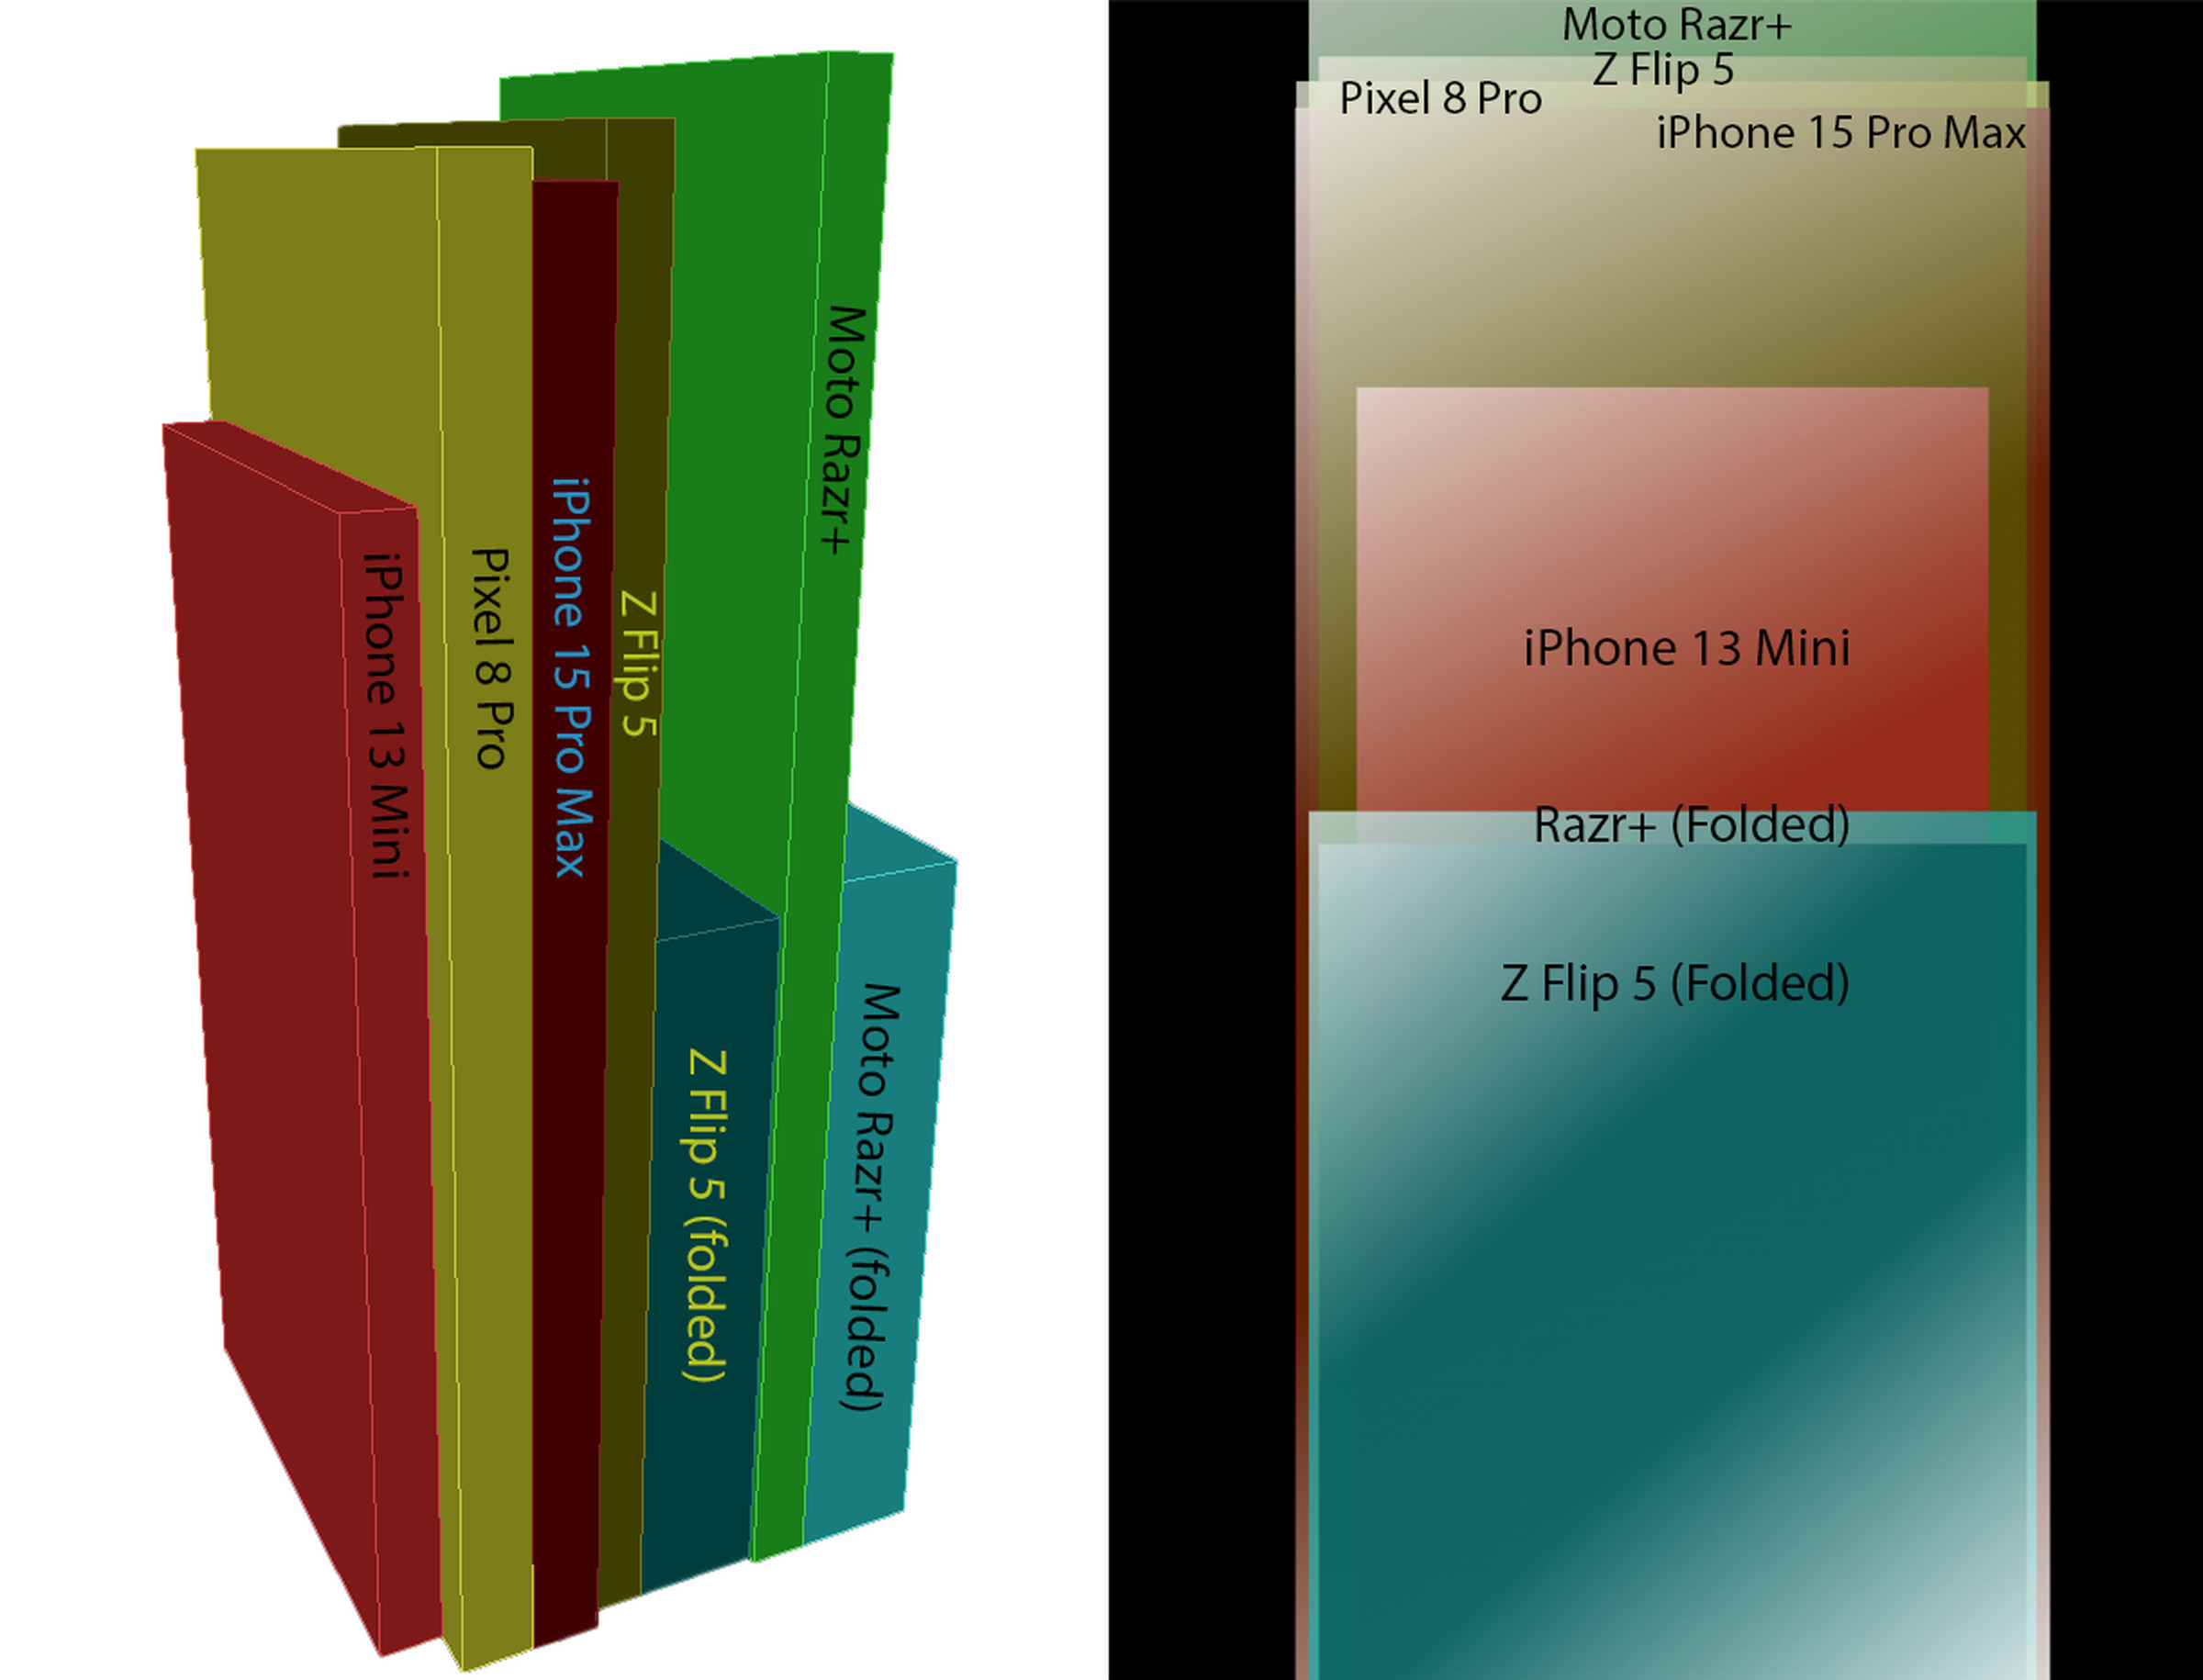 Colored size comparison boxes representing the iPhone Mini 13, Pixel 8 Pro, iPhone 15 Pro max, Z Flip 5 and Moto Razr Plus show the folding phones are quite large.